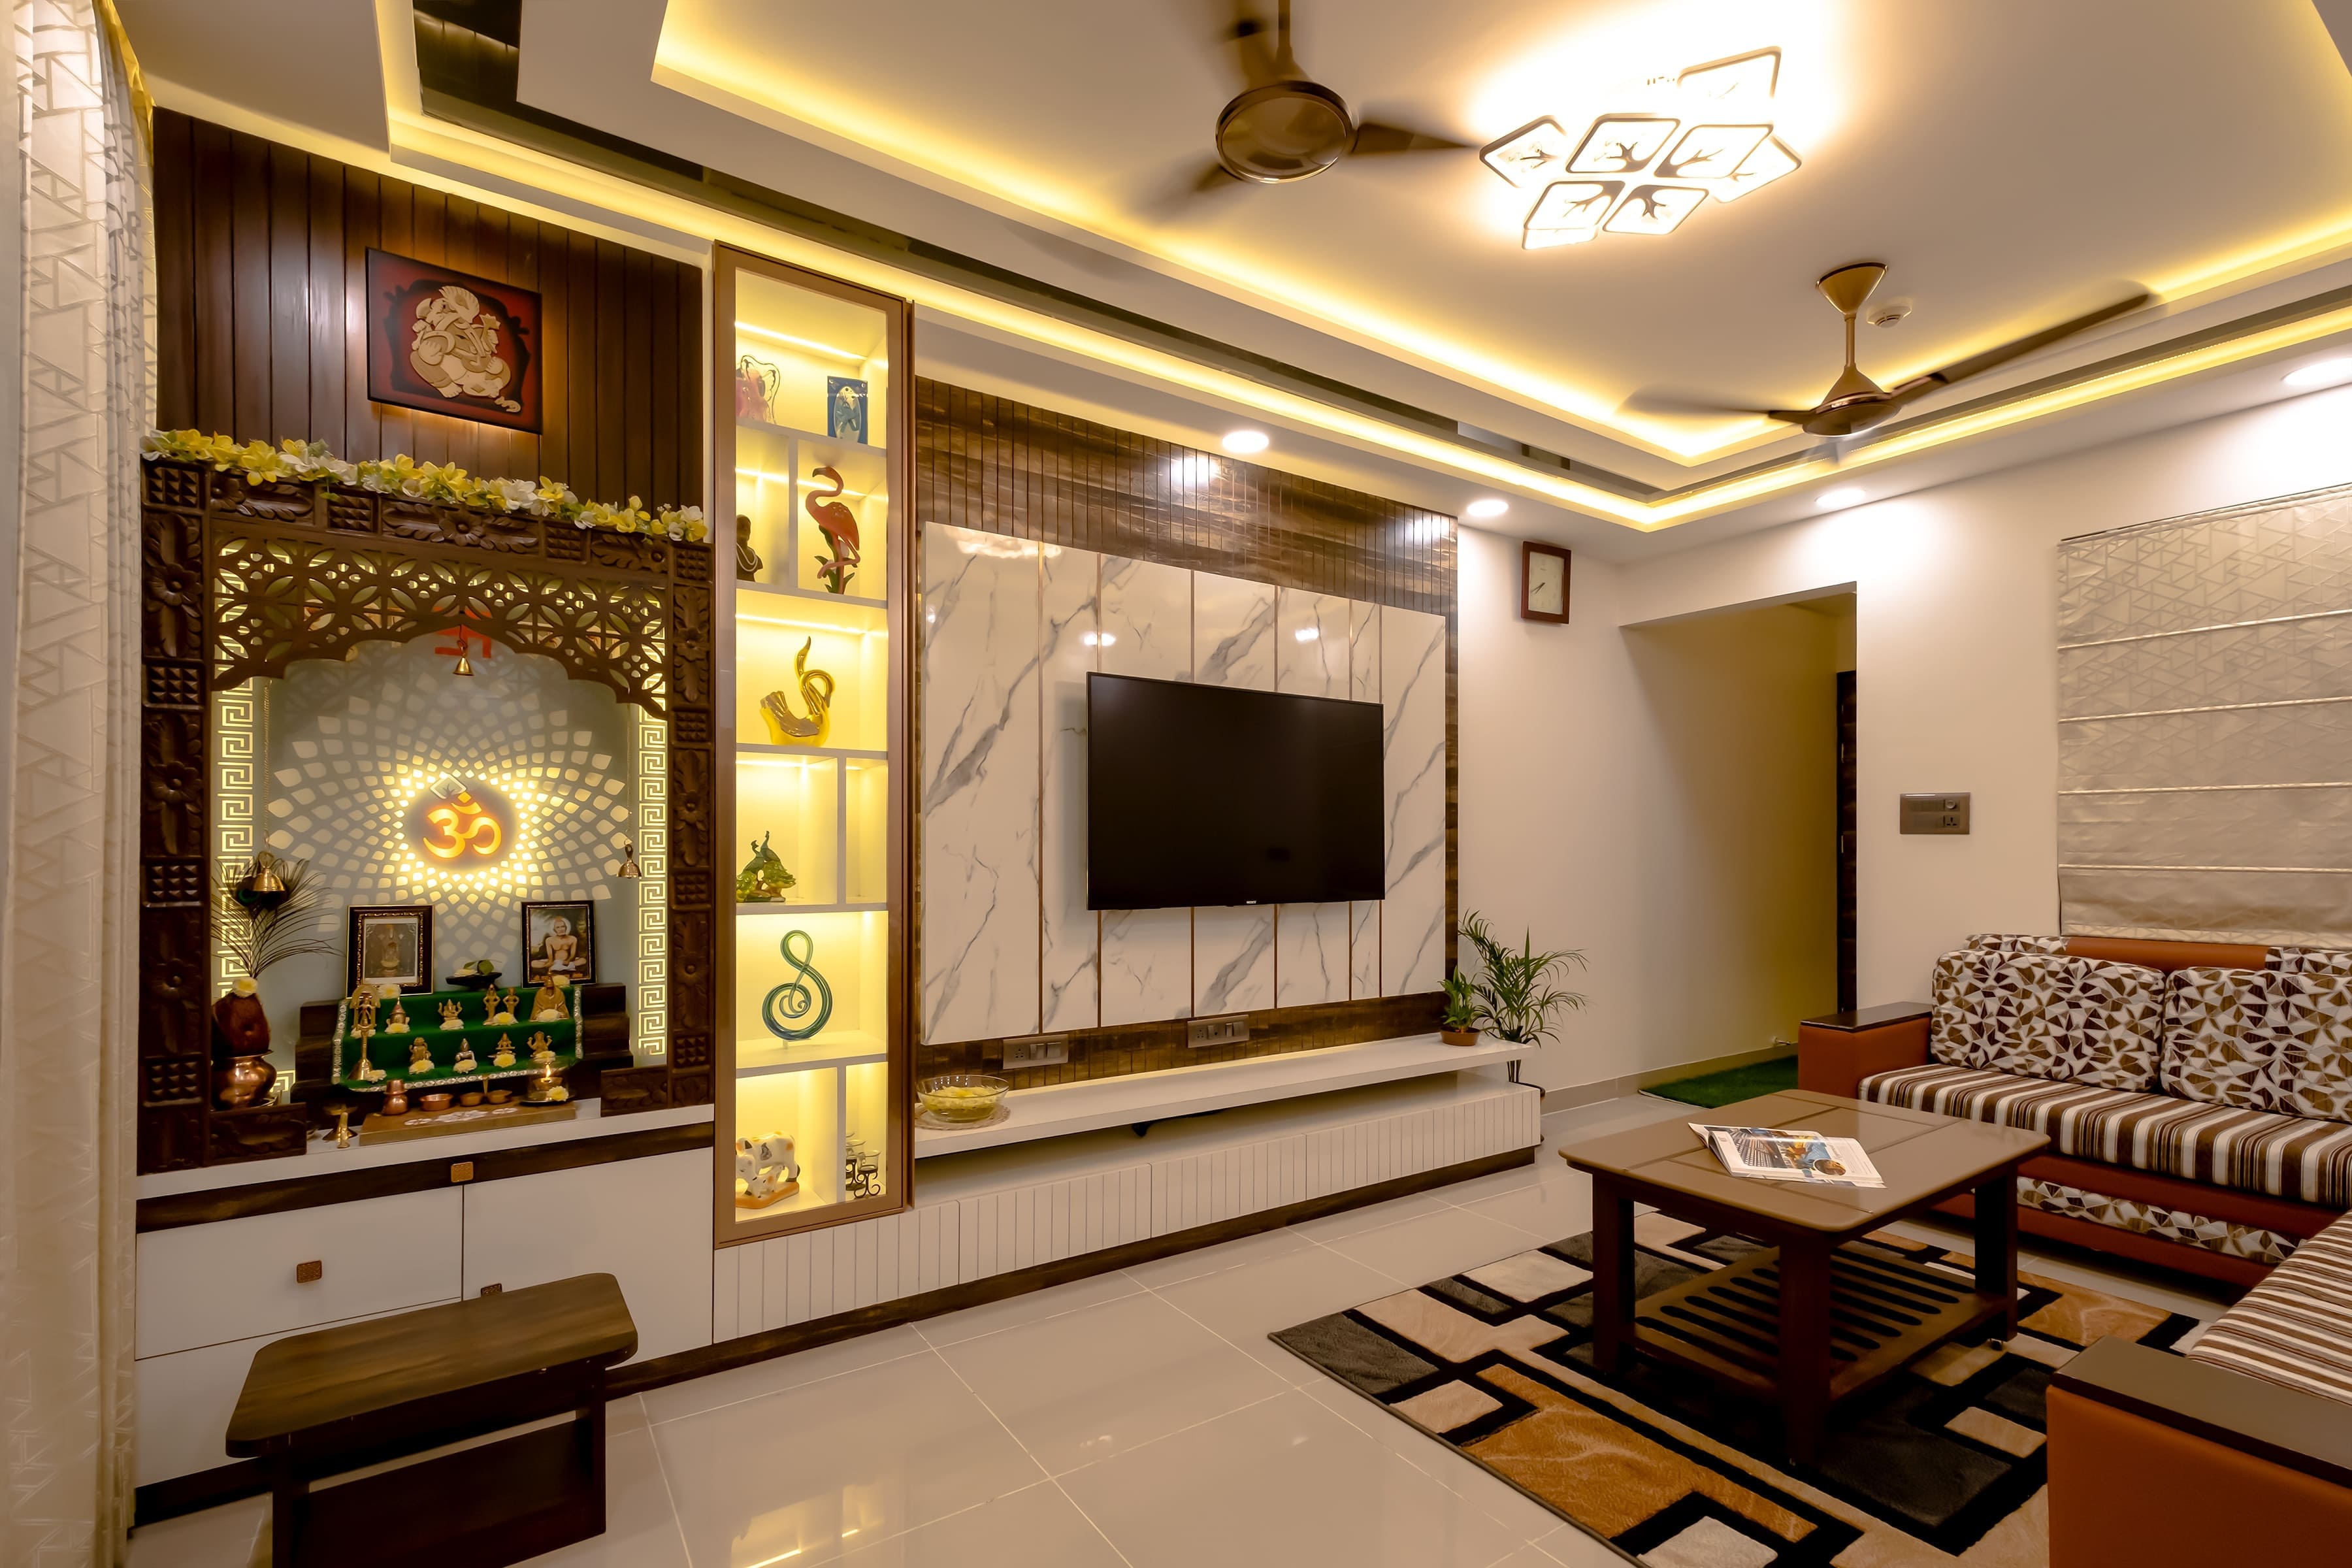 Kitchen, Living Room, Pooja room, Bedroom interiors